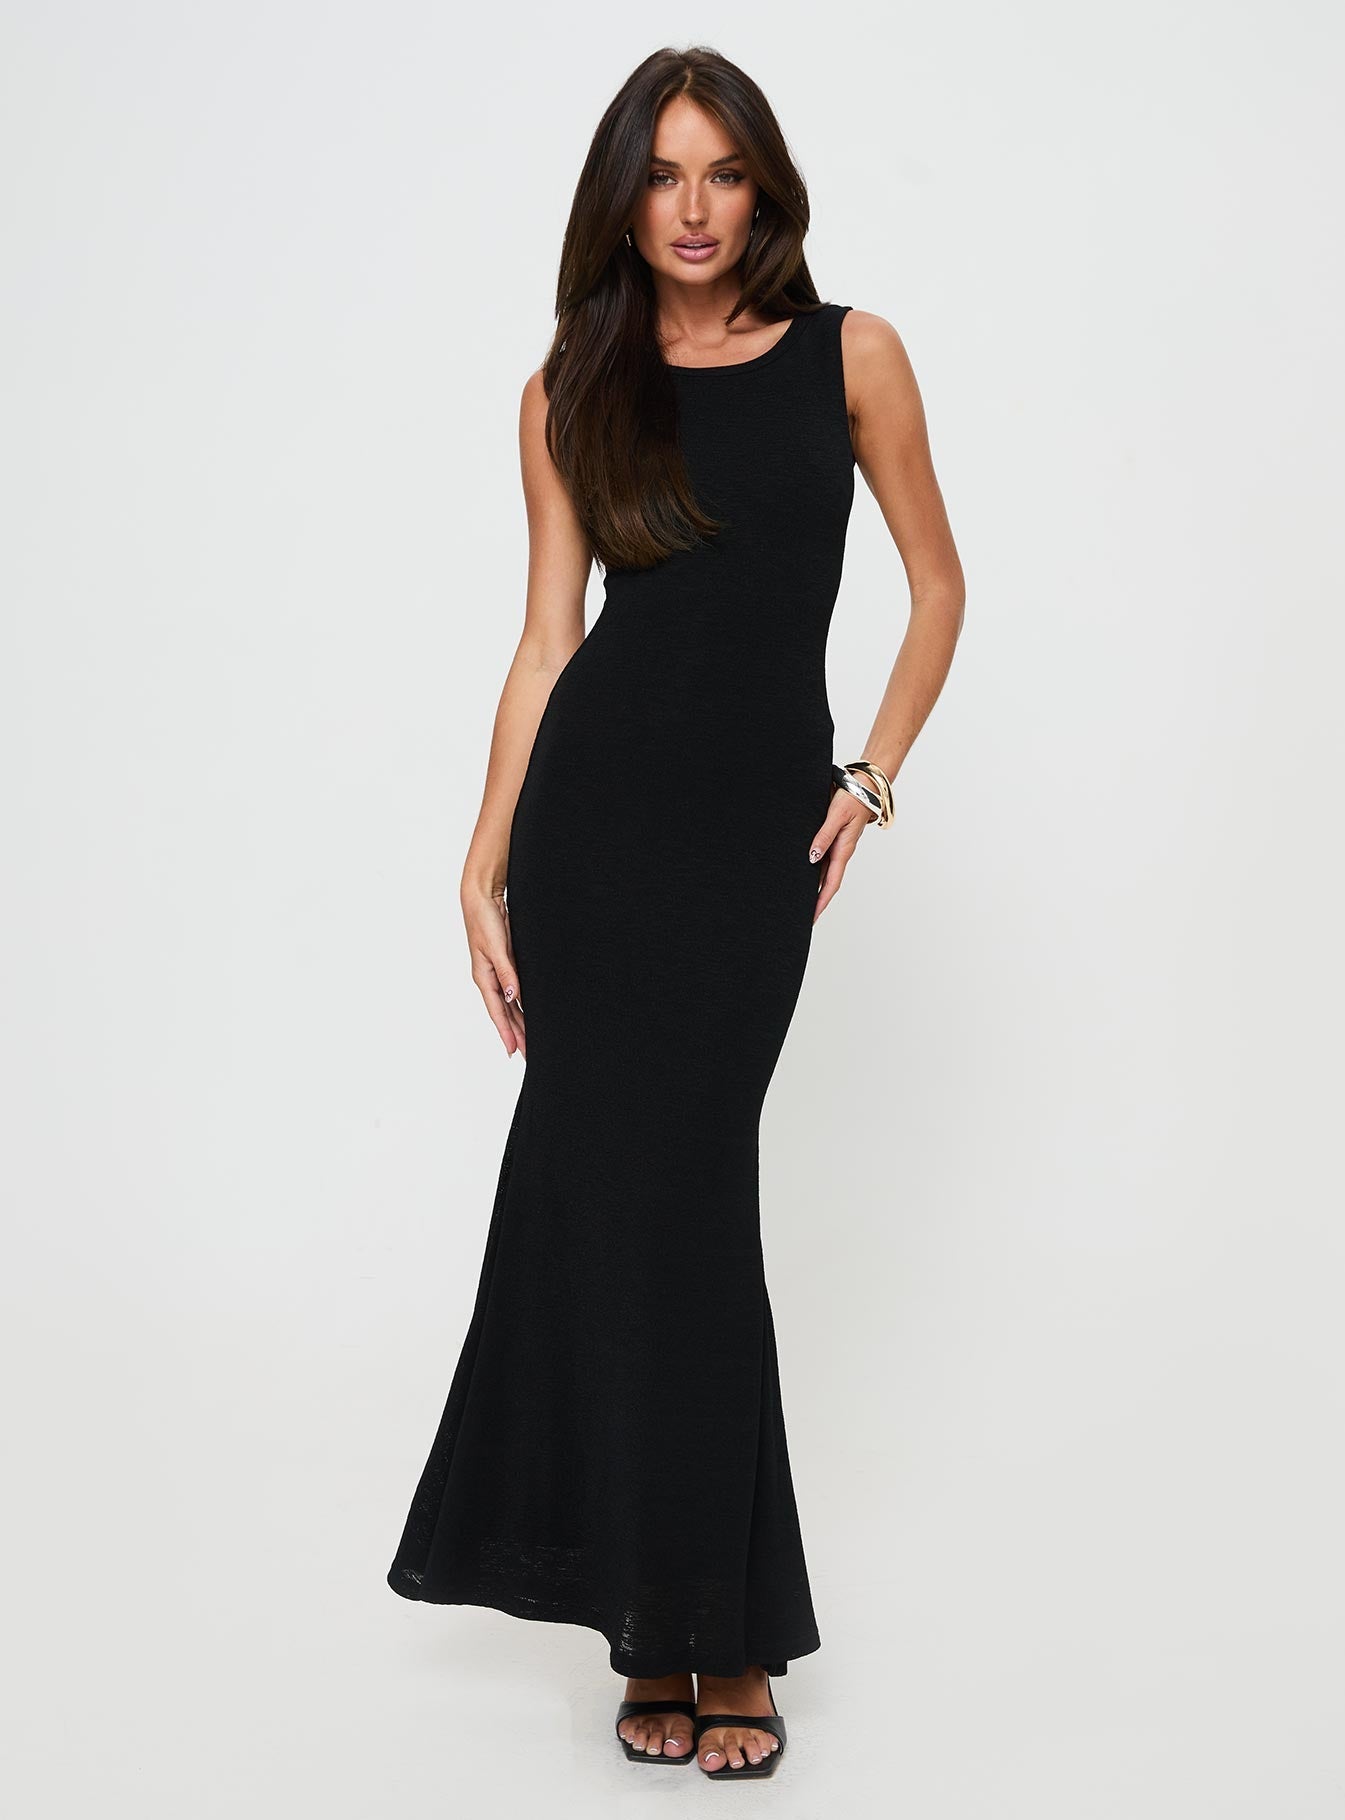 Shop Formal Dress - Ashen Maxi Dress Black sixth image